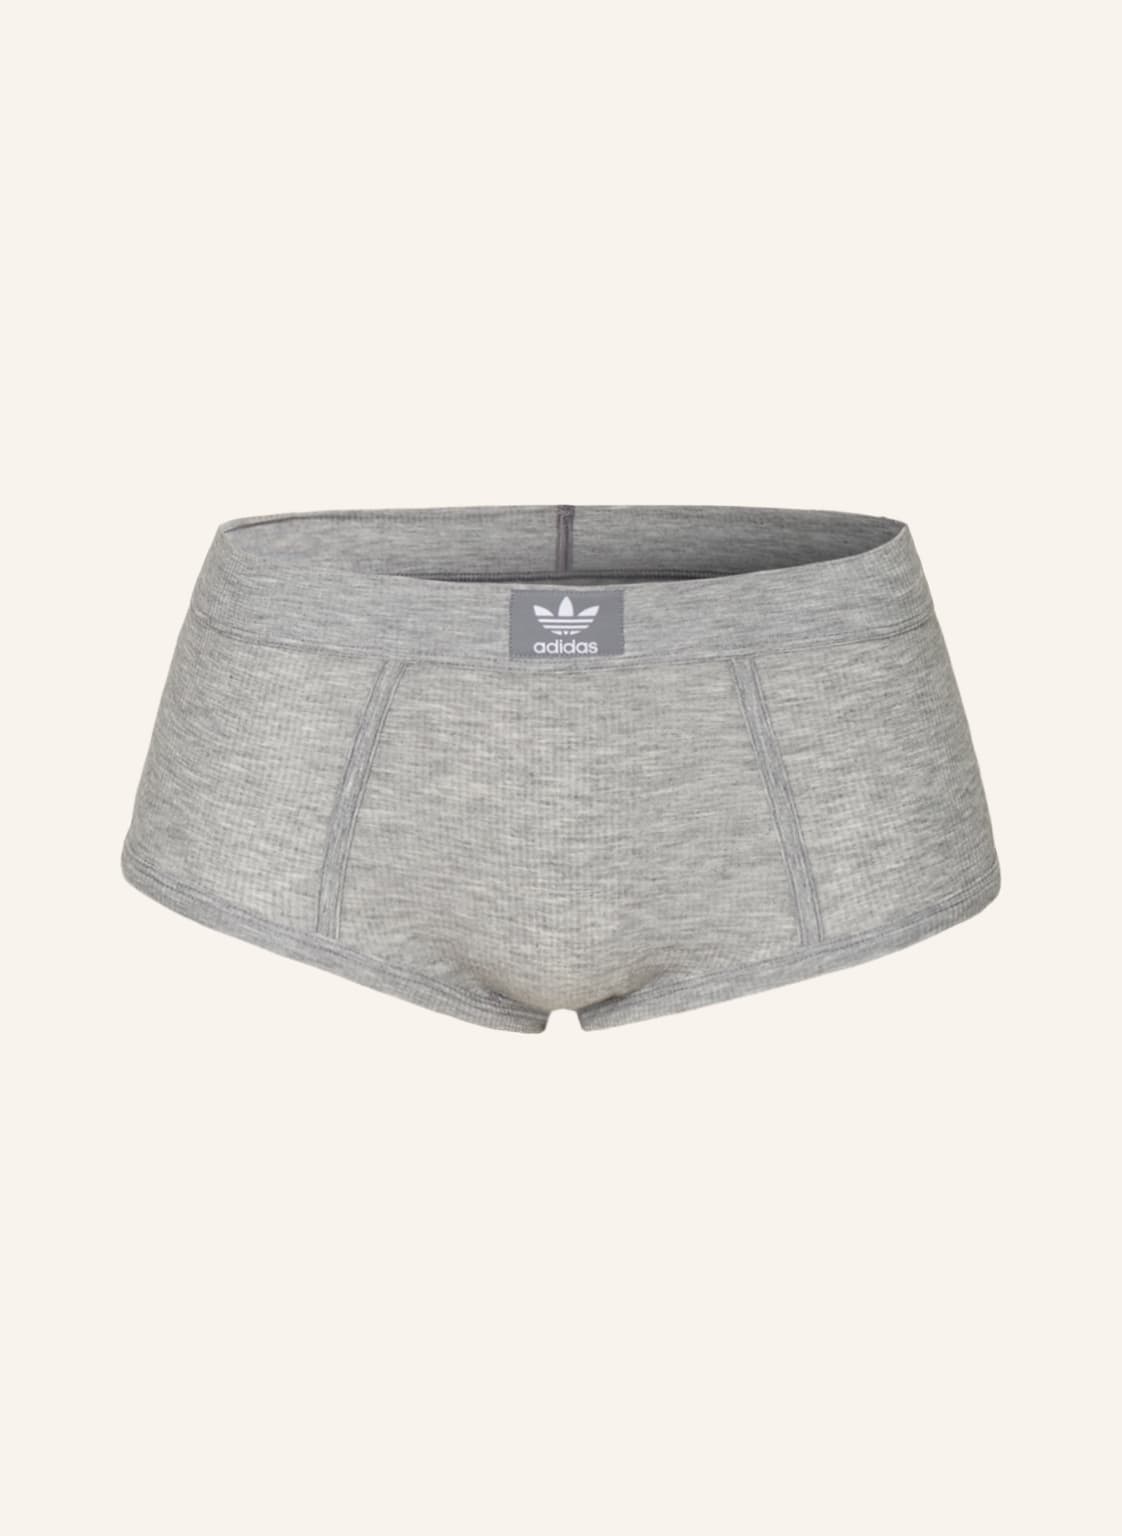 Image of Adidas Originals Panty grau